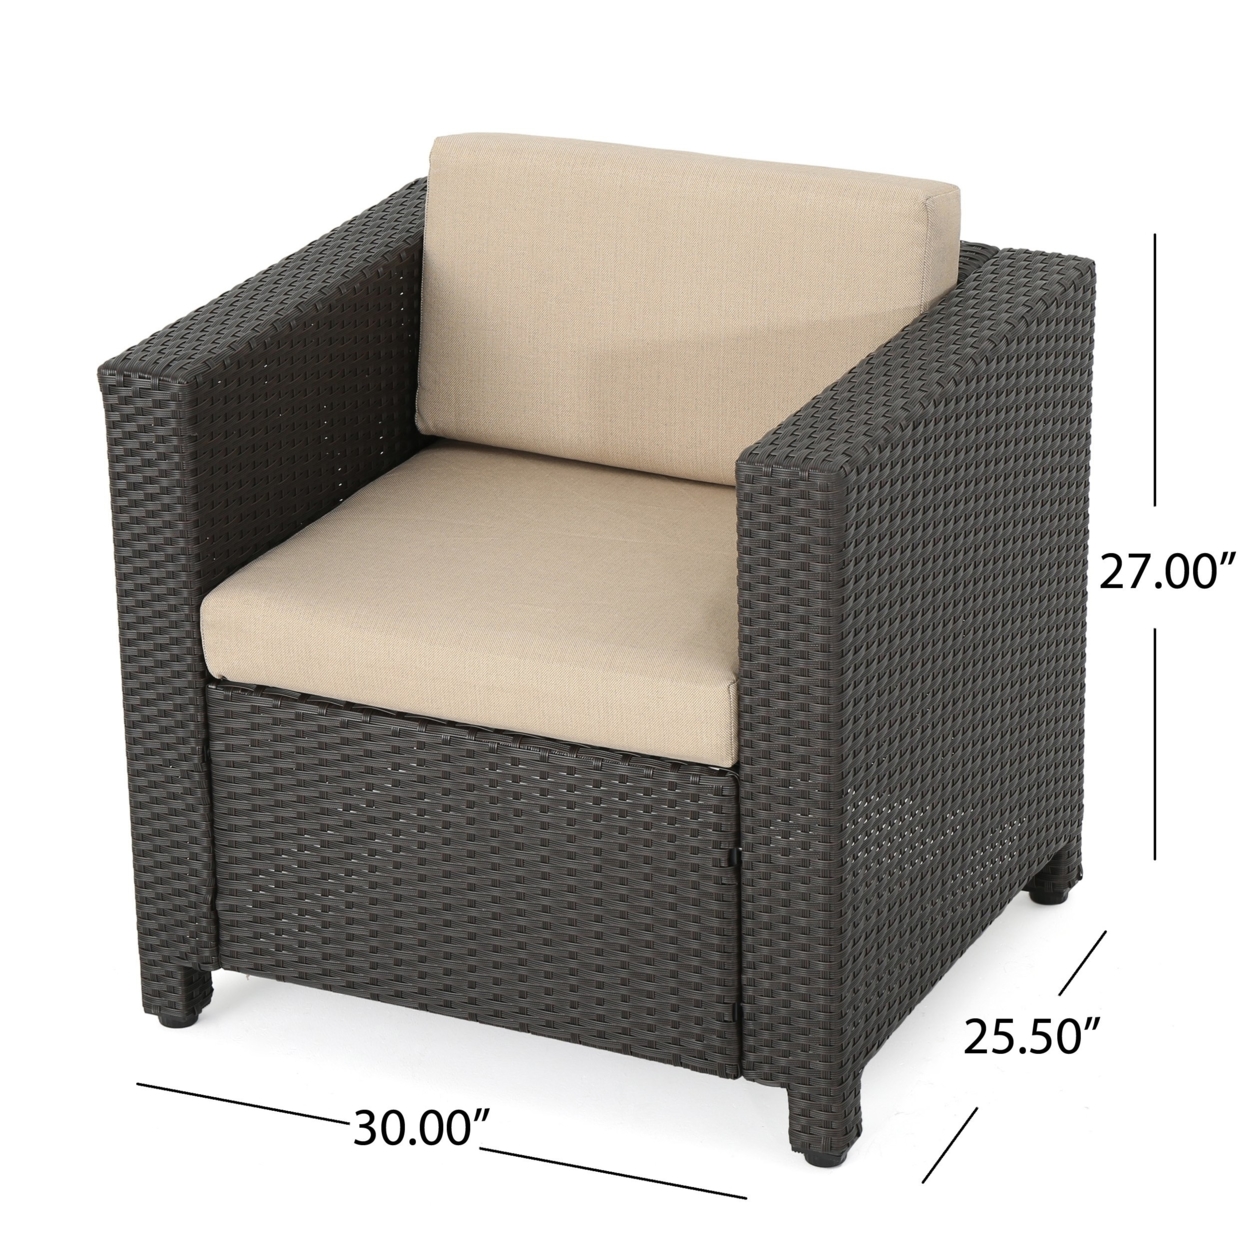 Pueblo Outdoor Wicker Club Chair(s) With Water Resistant Cushions - Dark Brown/beige, Qty Of 2